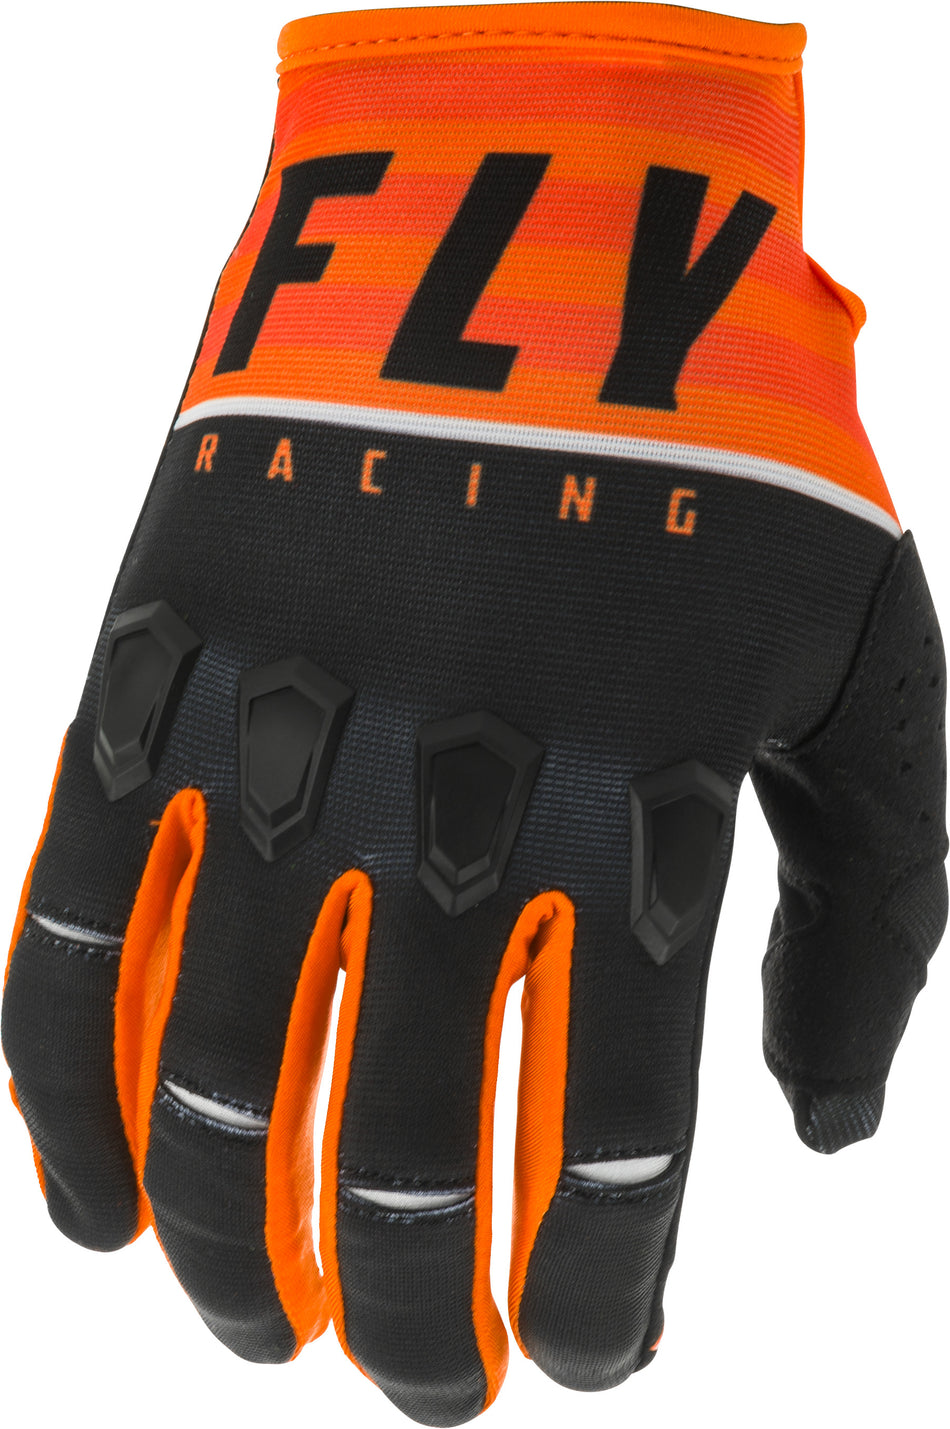 FLY RACING Kinetic K120 Gloves Orange/Black/White Sz 12 373-41712